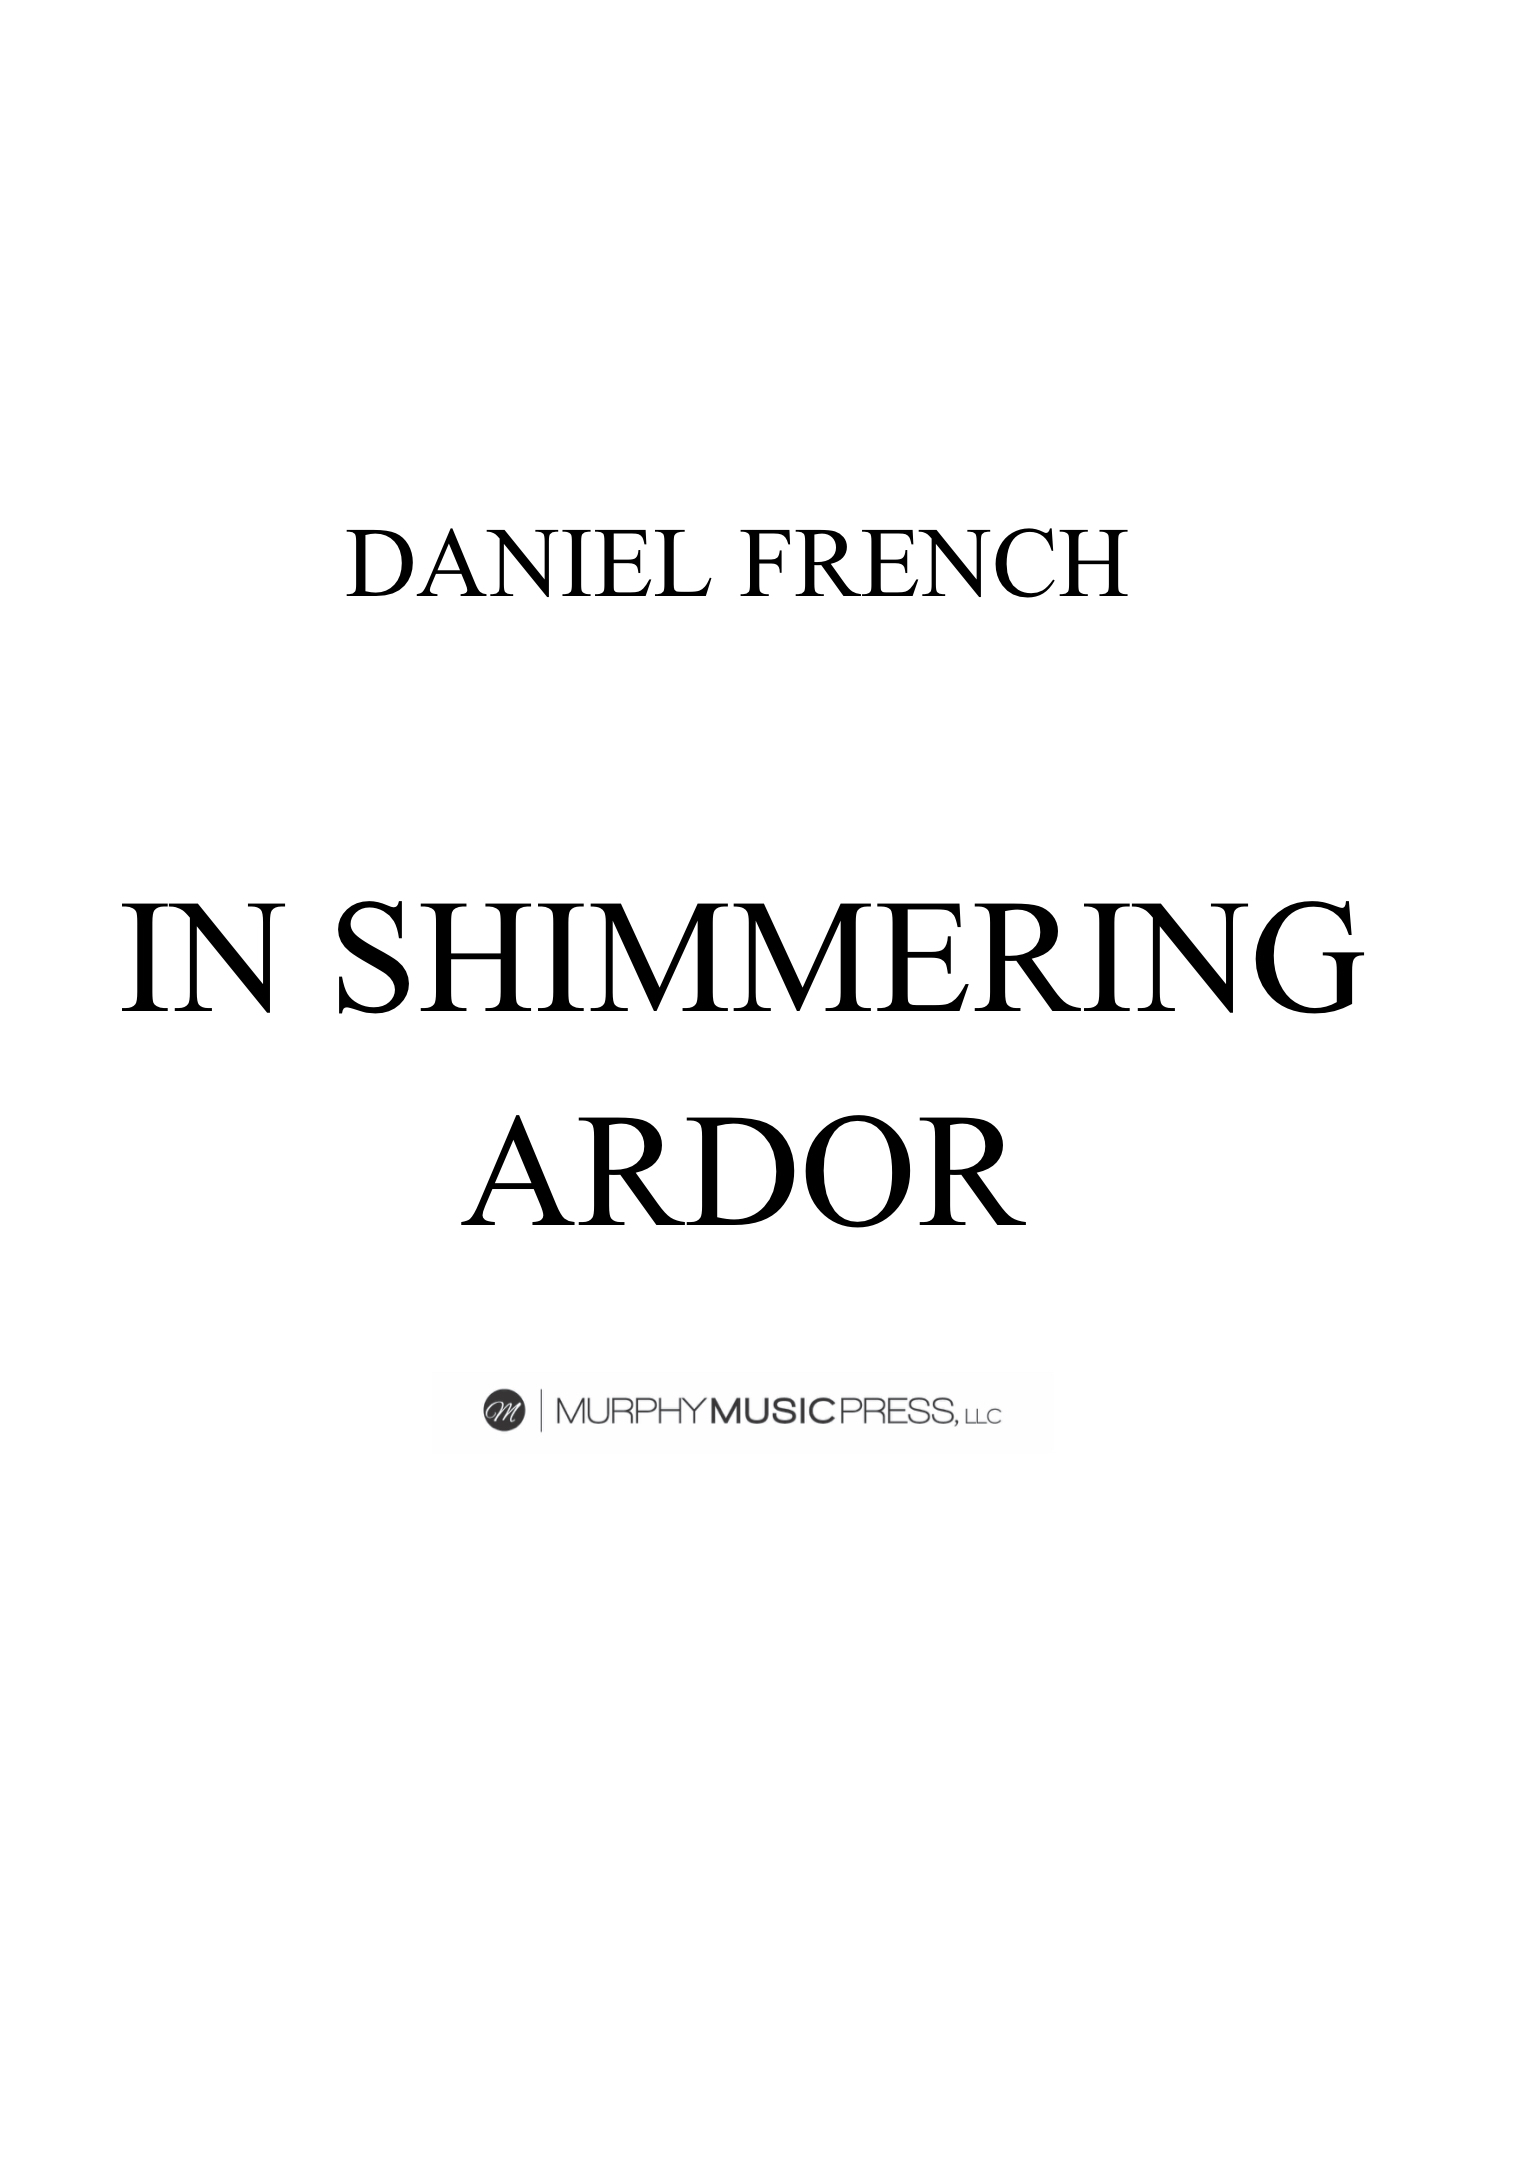 In Shimmering Ardor by Daniel French